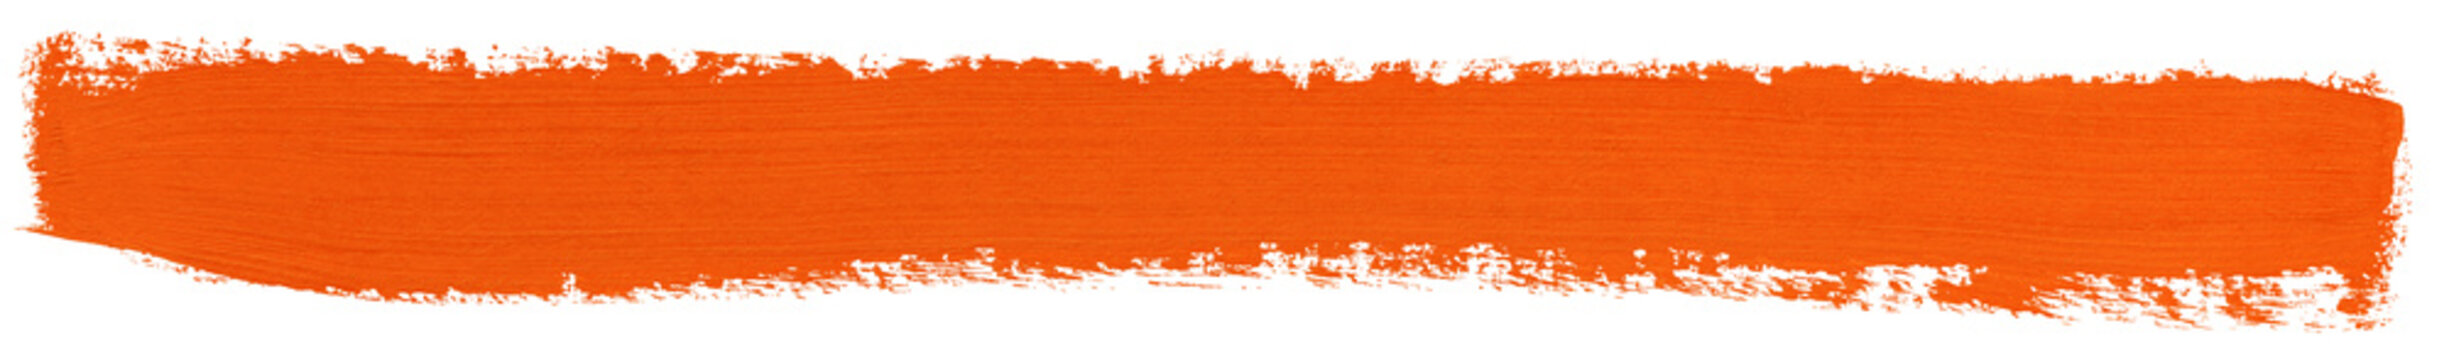 Orange stroke of paint isolated on transparent background